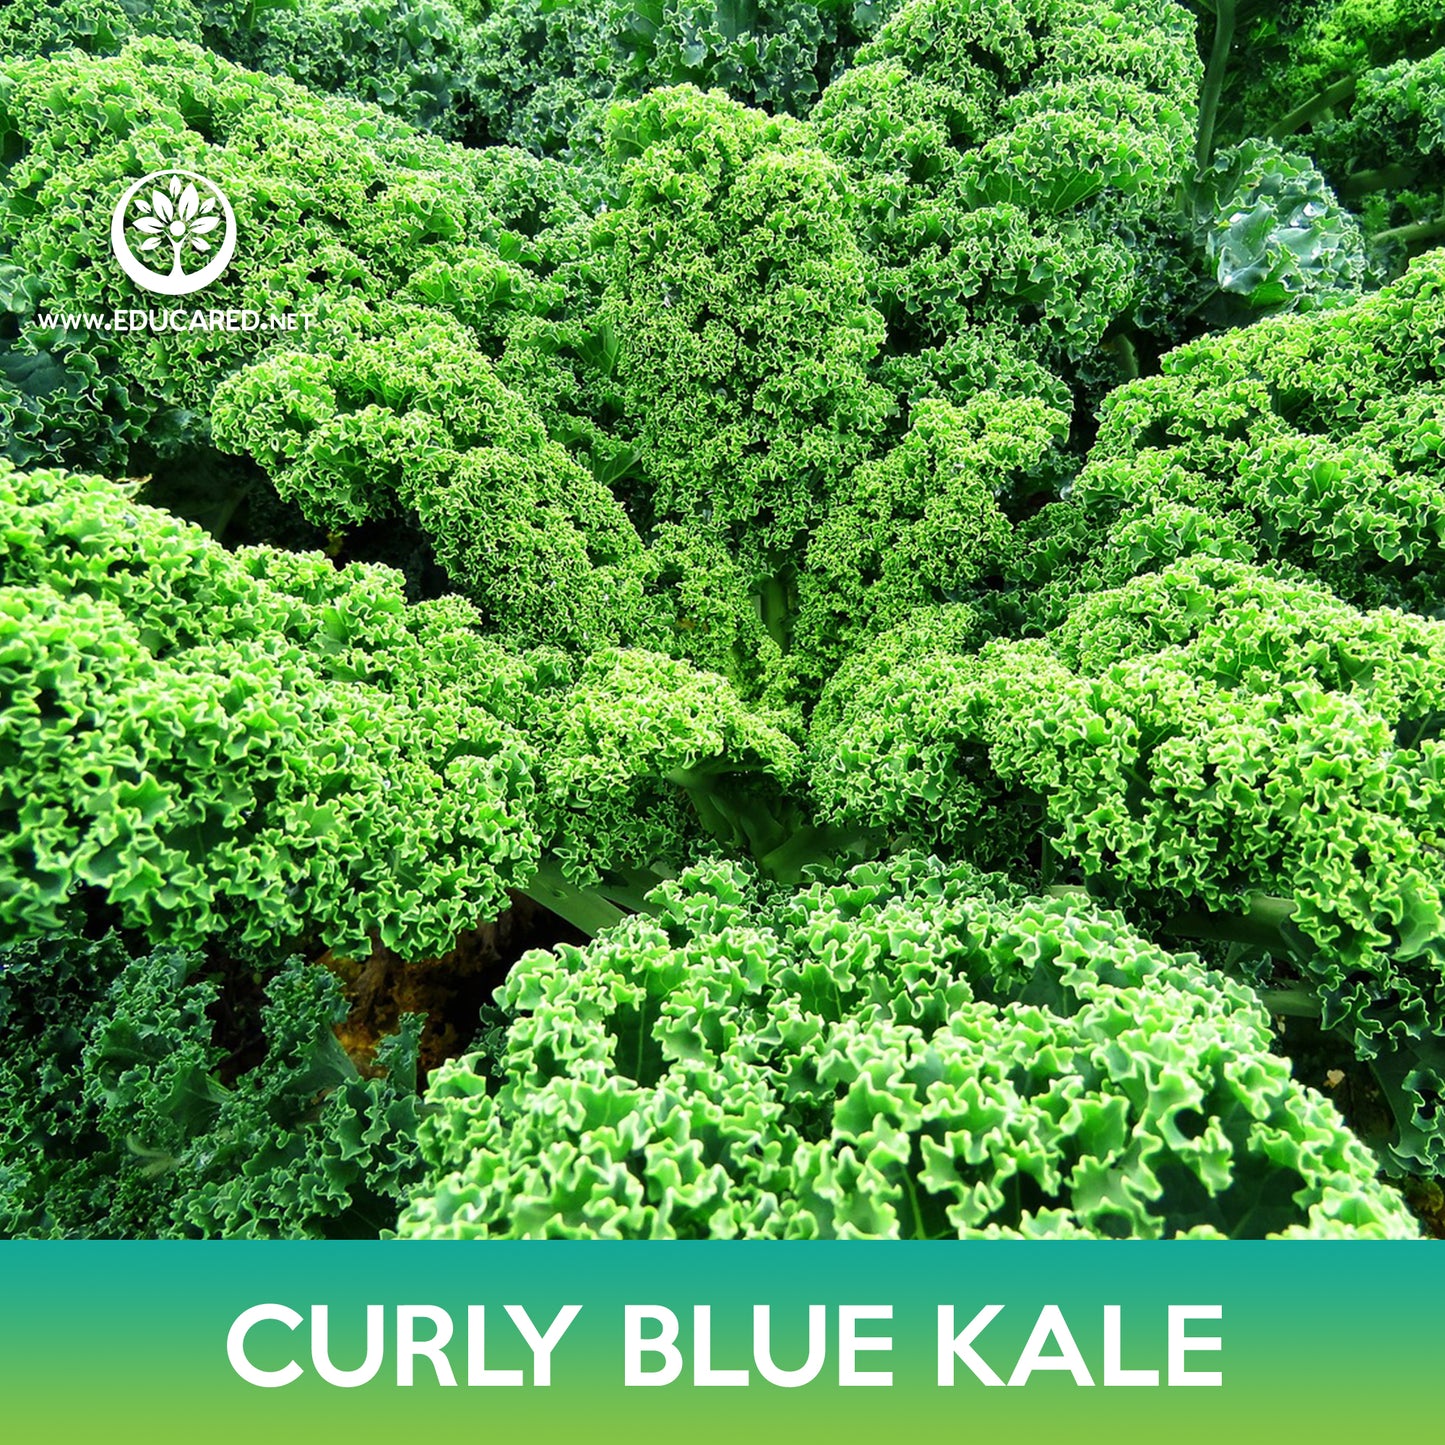 Curly Blue Kale Seeds, Brassica oleracea var sabellica